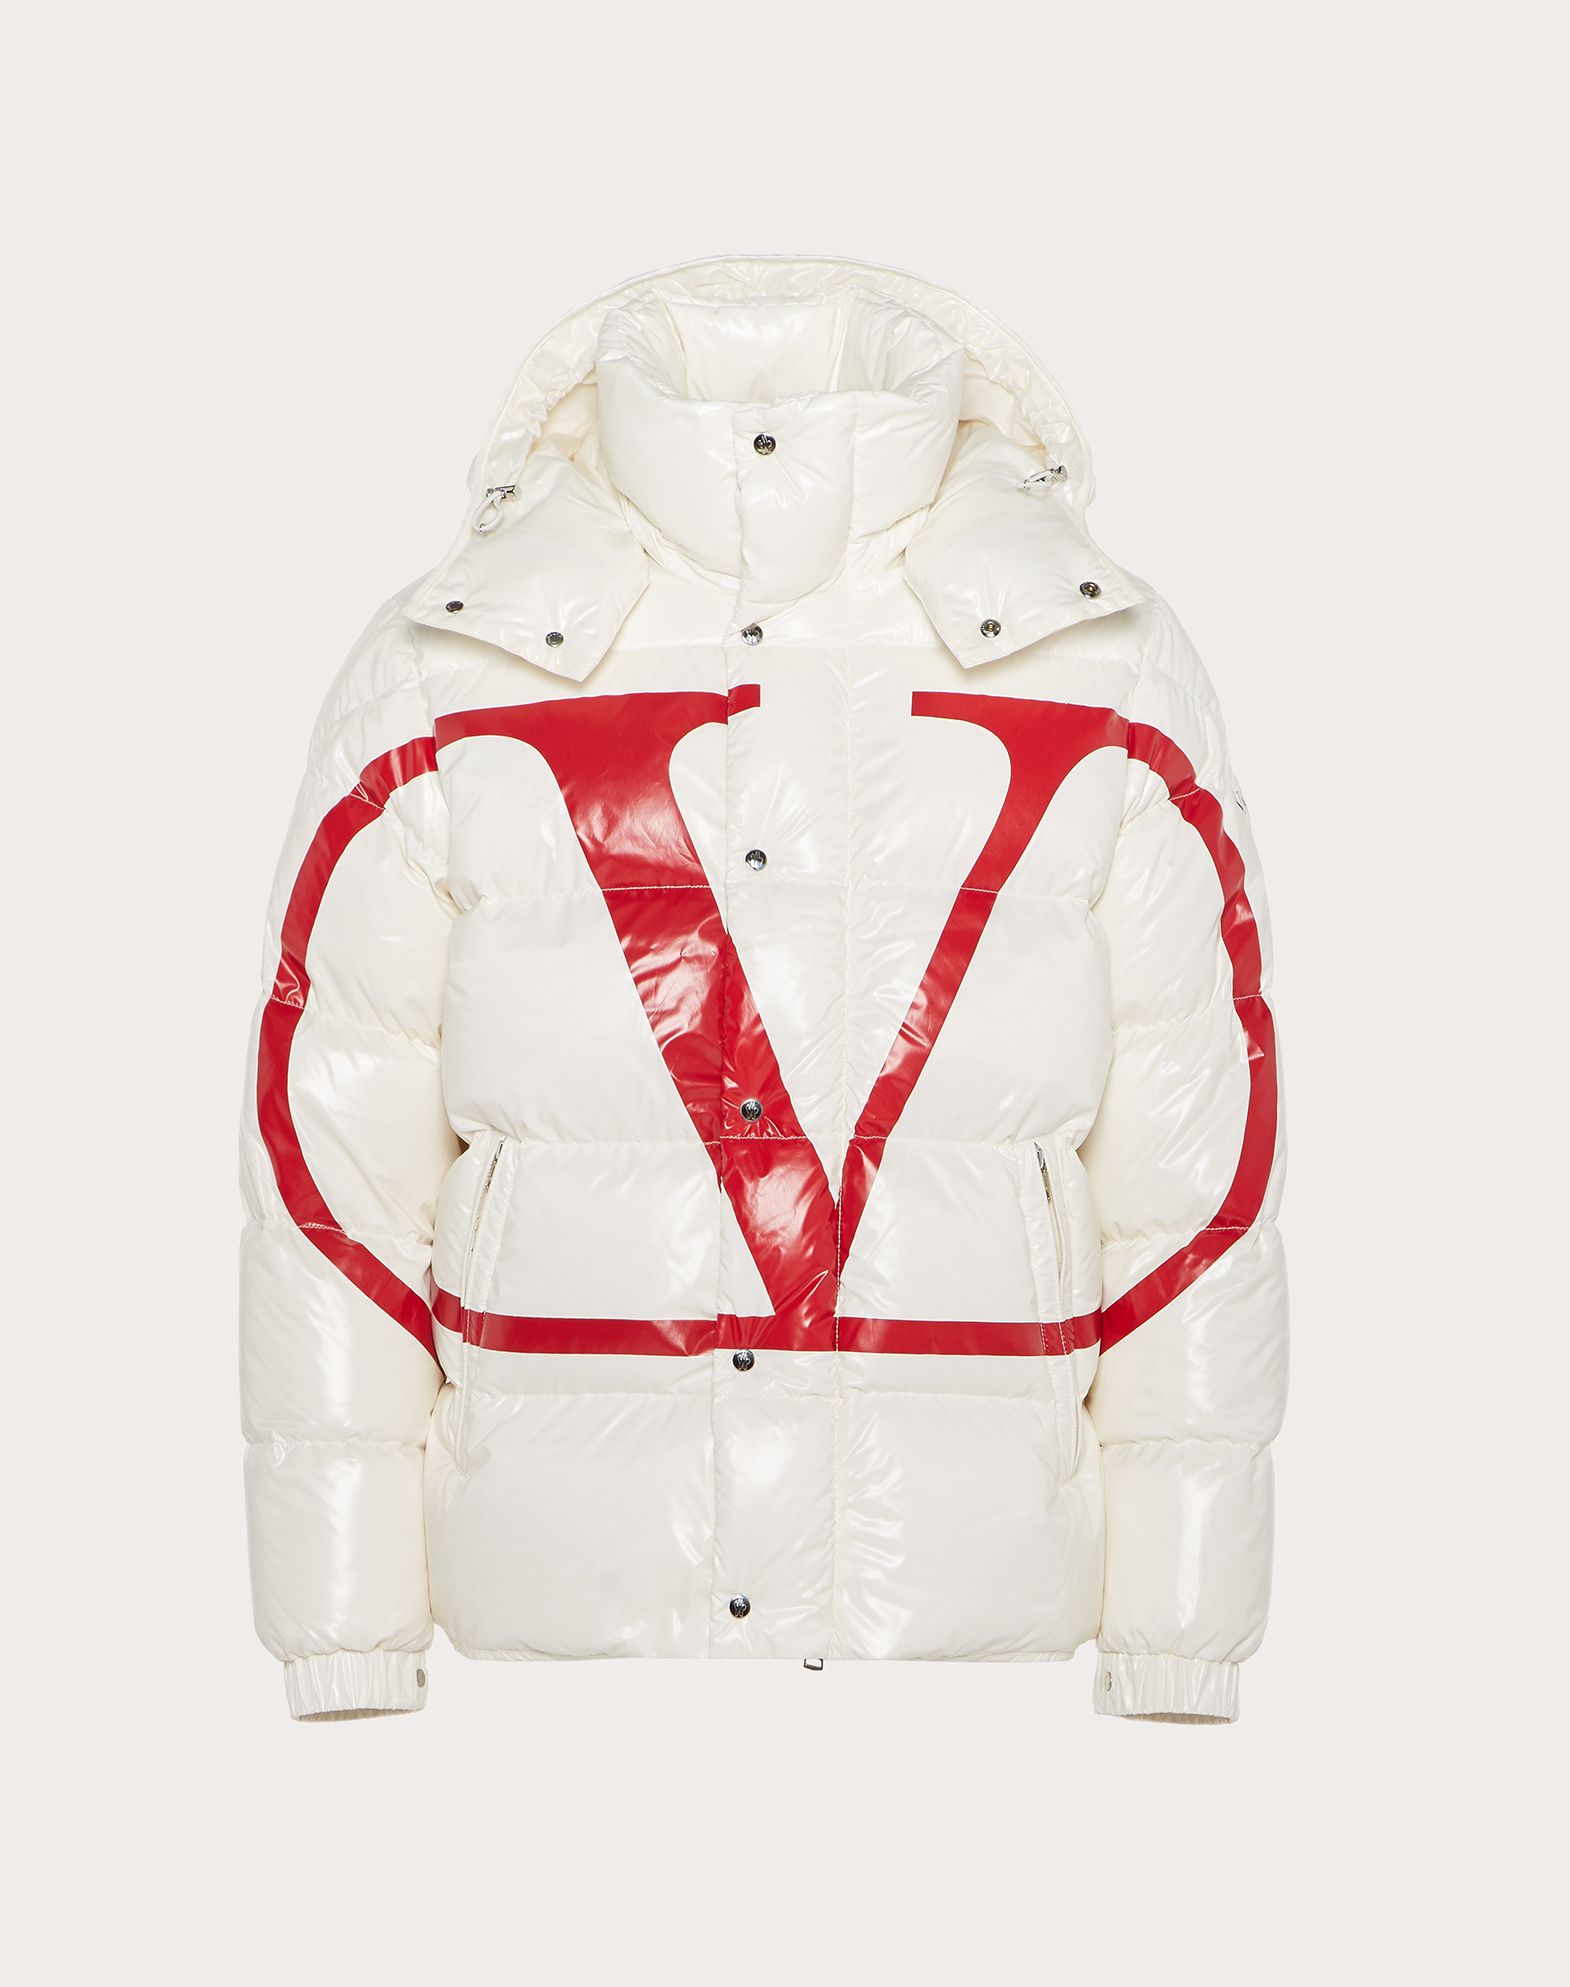 moncler x valentino jacket